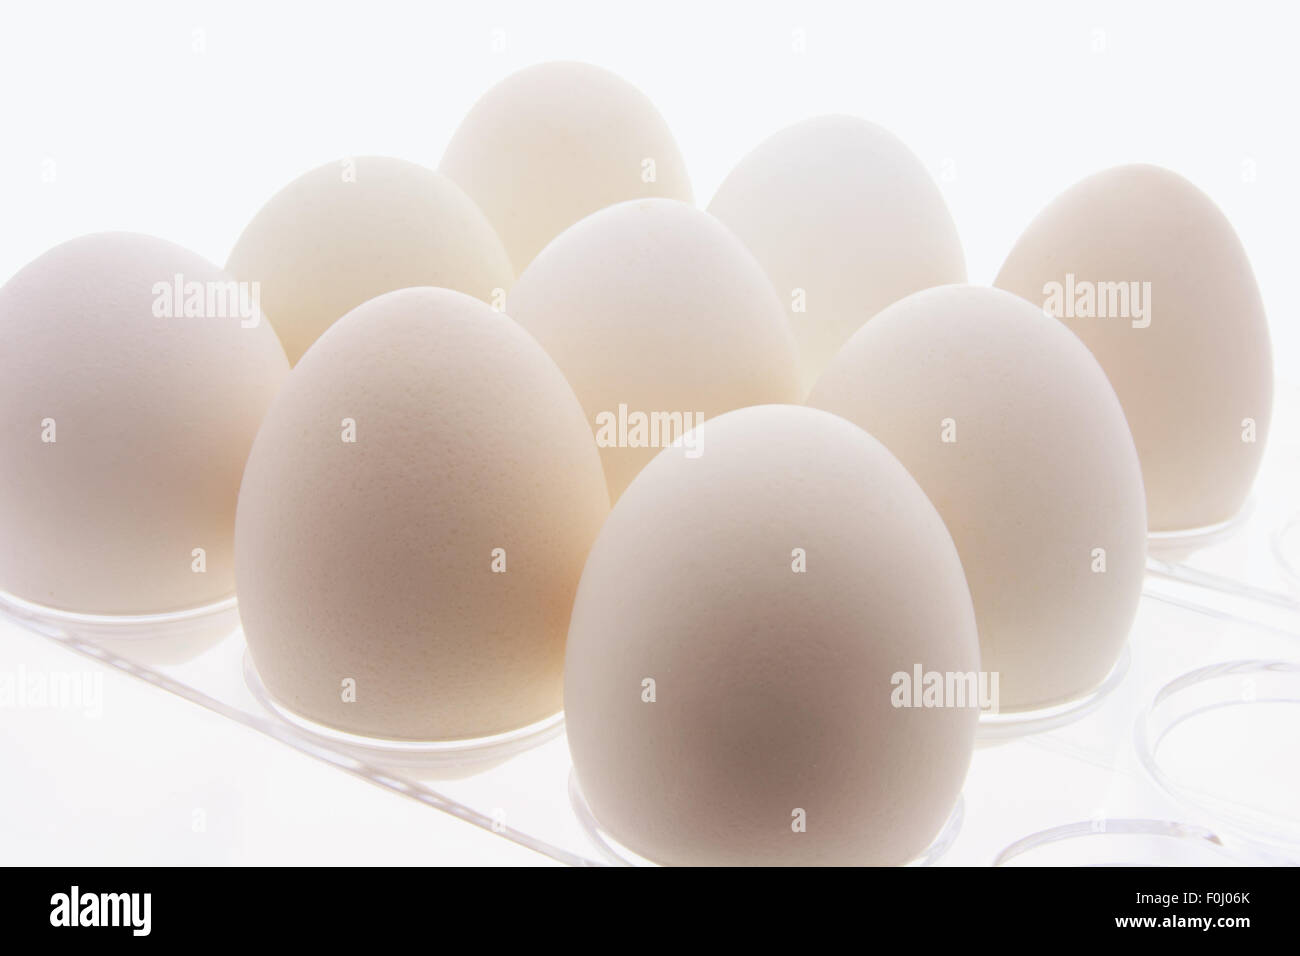 White Eggs on Plastic Egg Carton Stock Photo